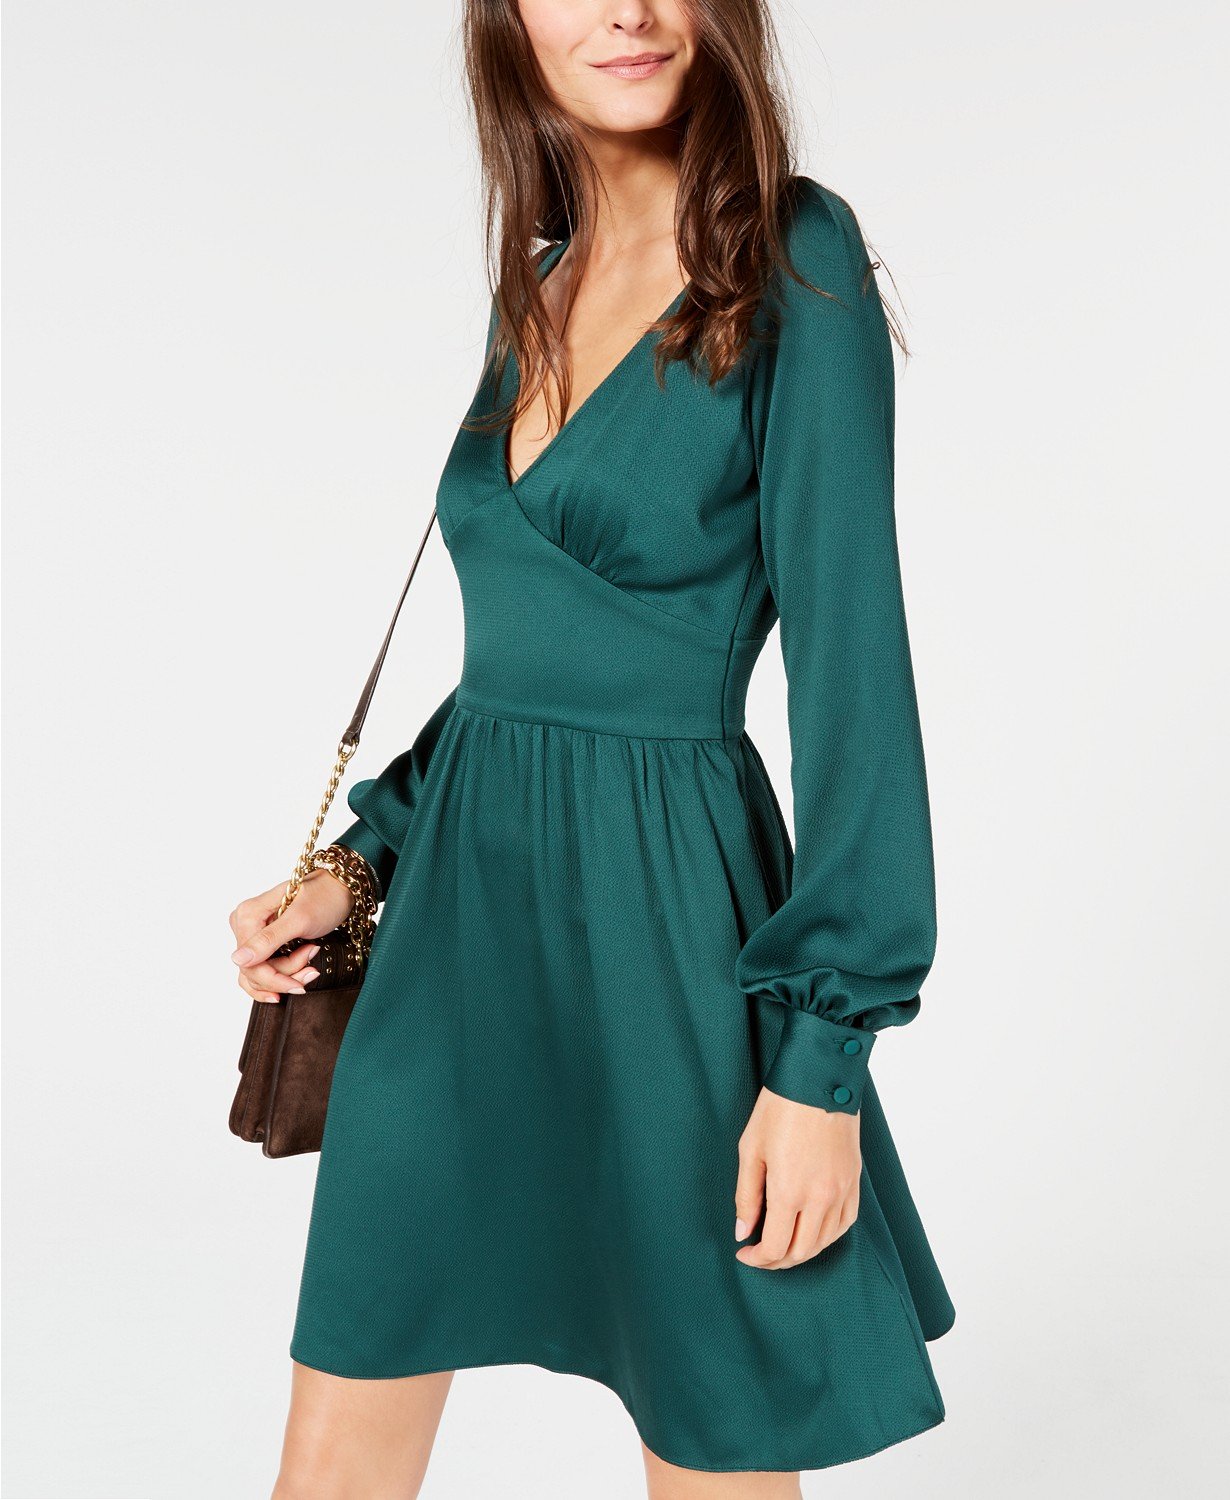 MICHAEL KORS Womens Green Raglan V Neck Above The Knee Fit + Flare Party Dress - TopLine Fashion Lounge